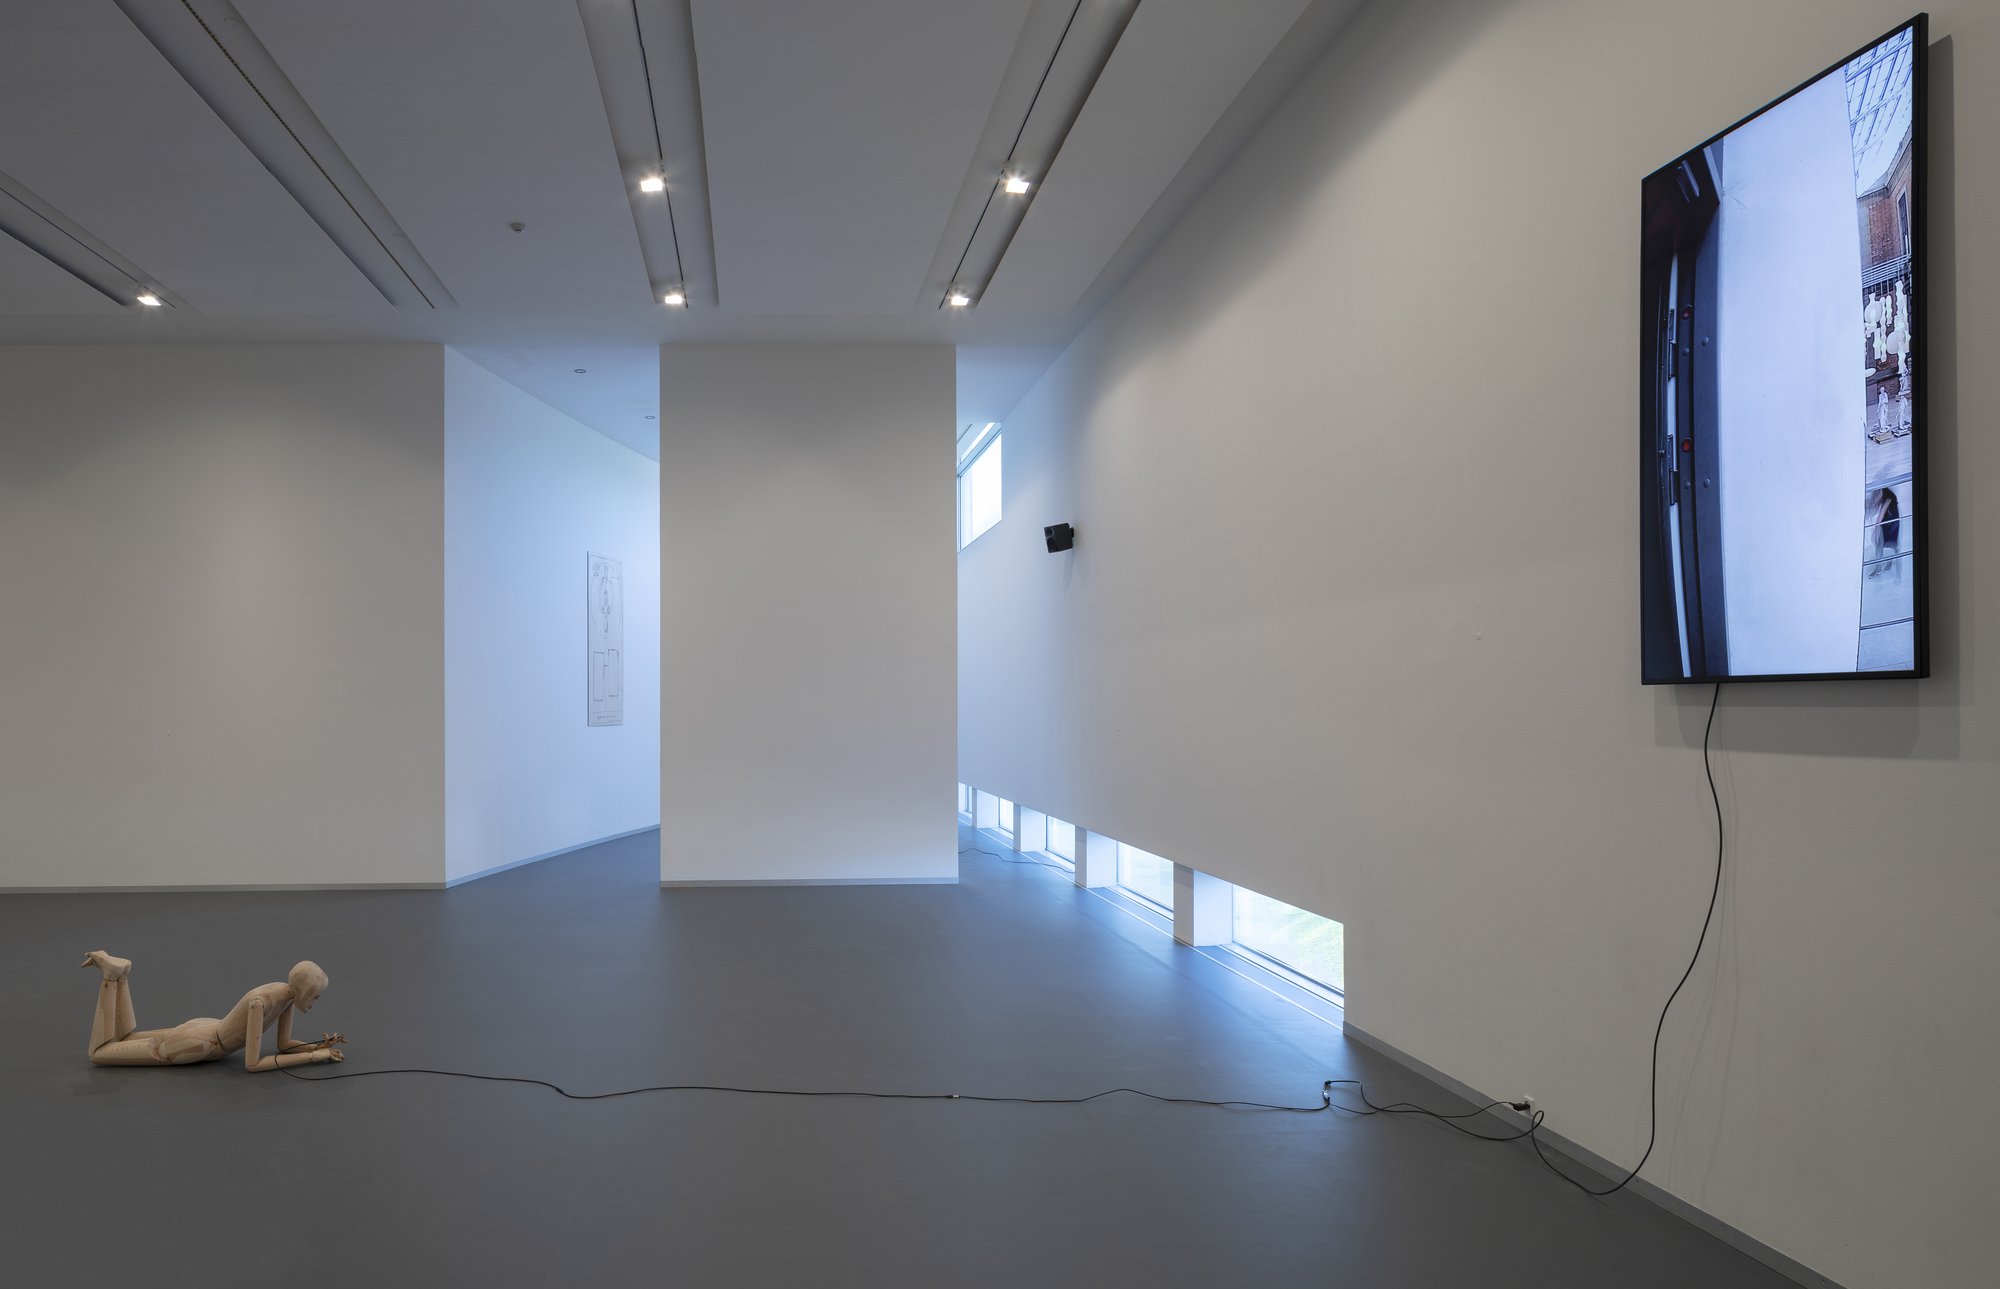 Installation view, Sidsel Meineche Hansen, An Artist’s Guide to Stop Being An Artist, SMK, Copenhagen, 2019